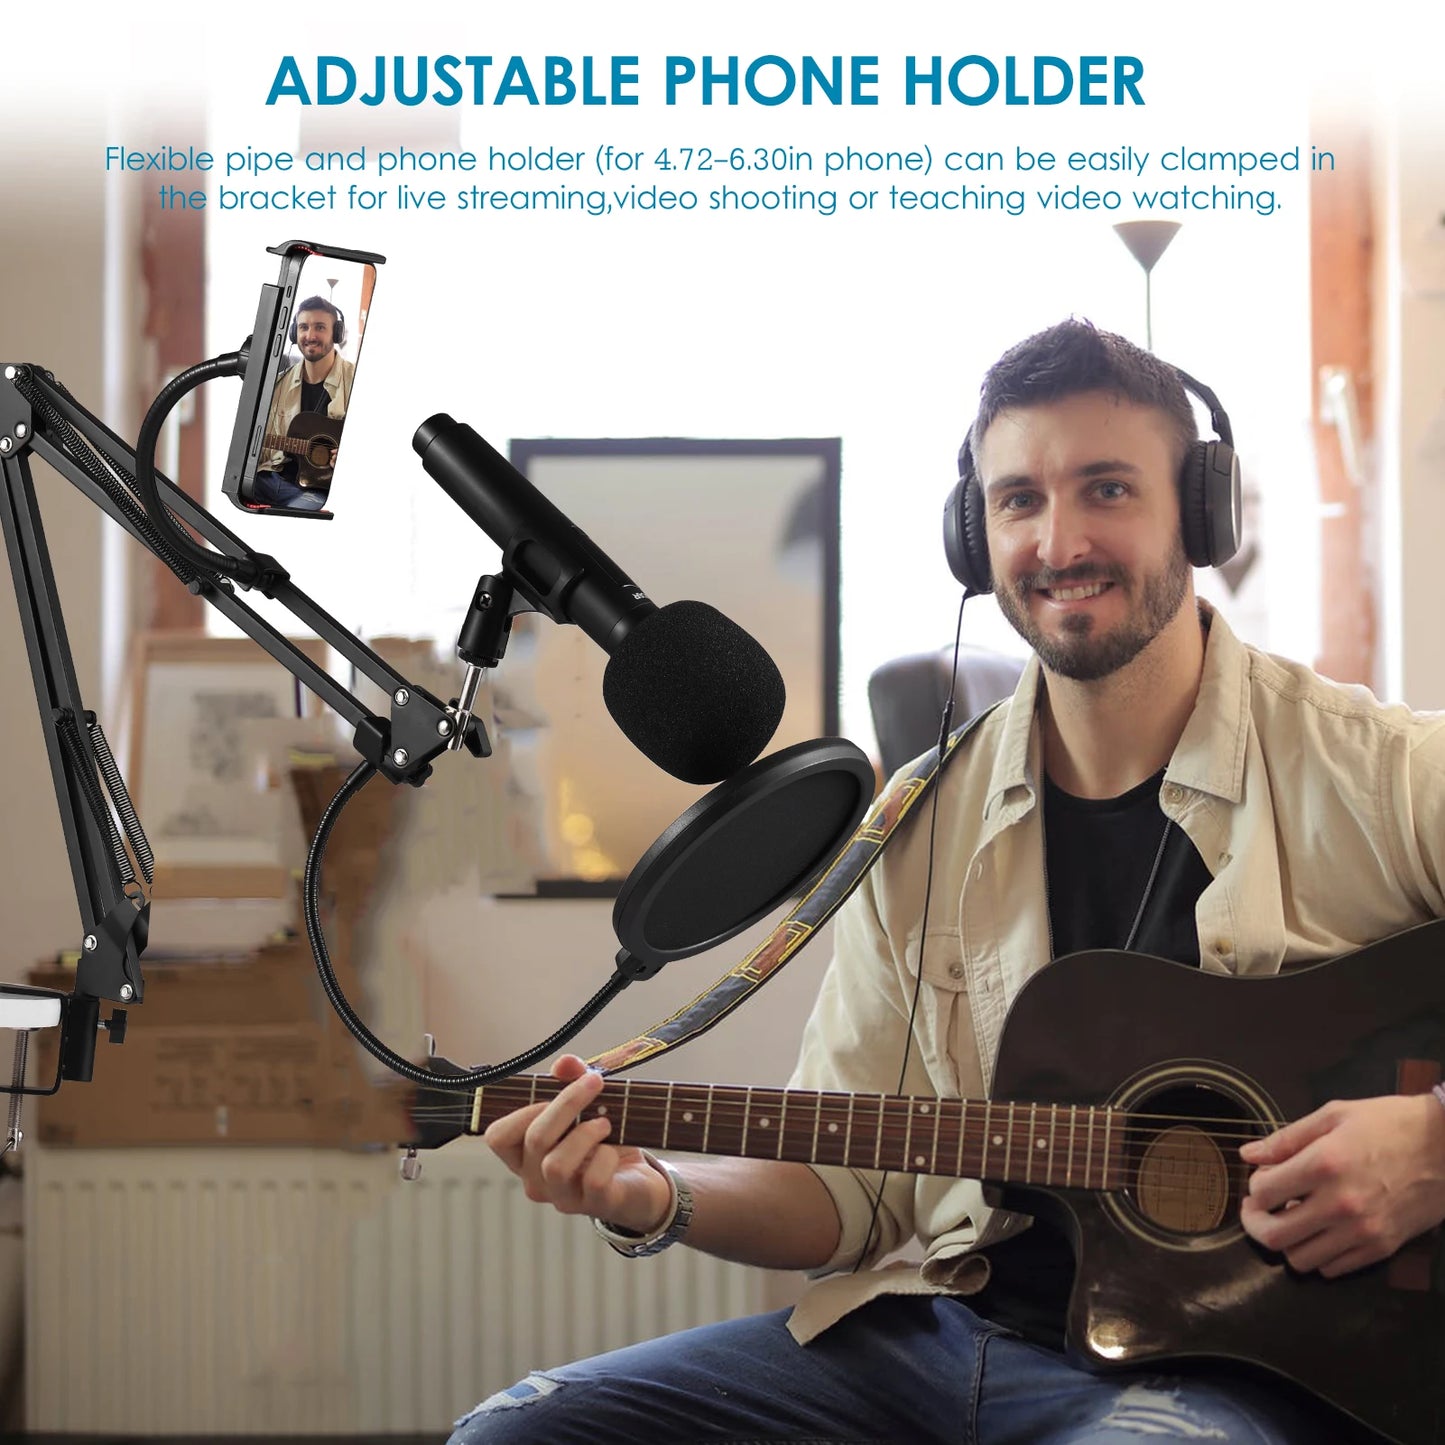 Microphone Arm Stand Adjustable Desktop Microphone Bracket & Mic Clip